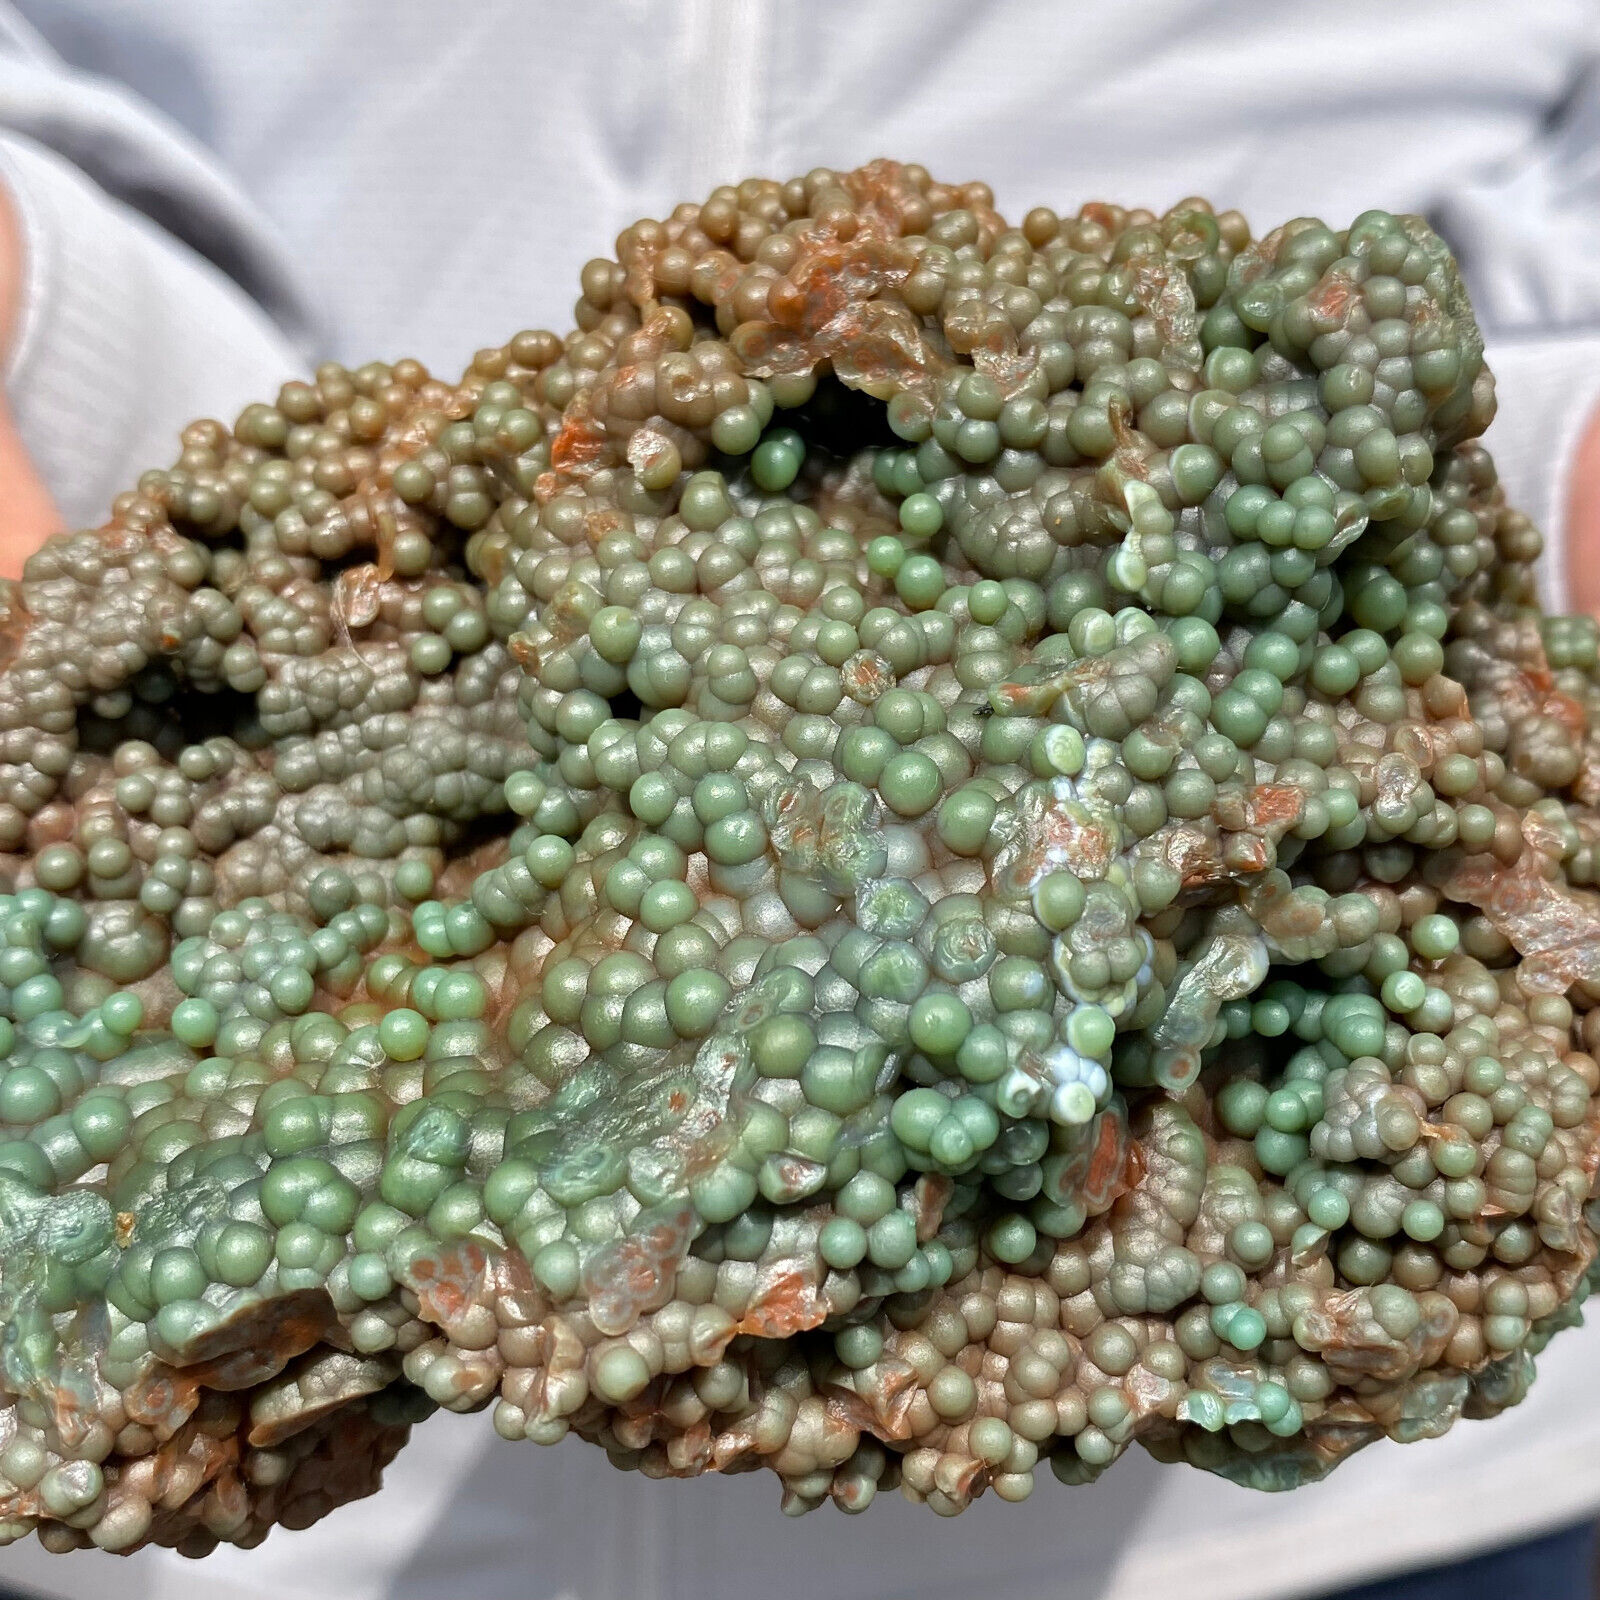 753g Large Raw Ocean Jasper Quartz Crystal Rough Healing Specimen